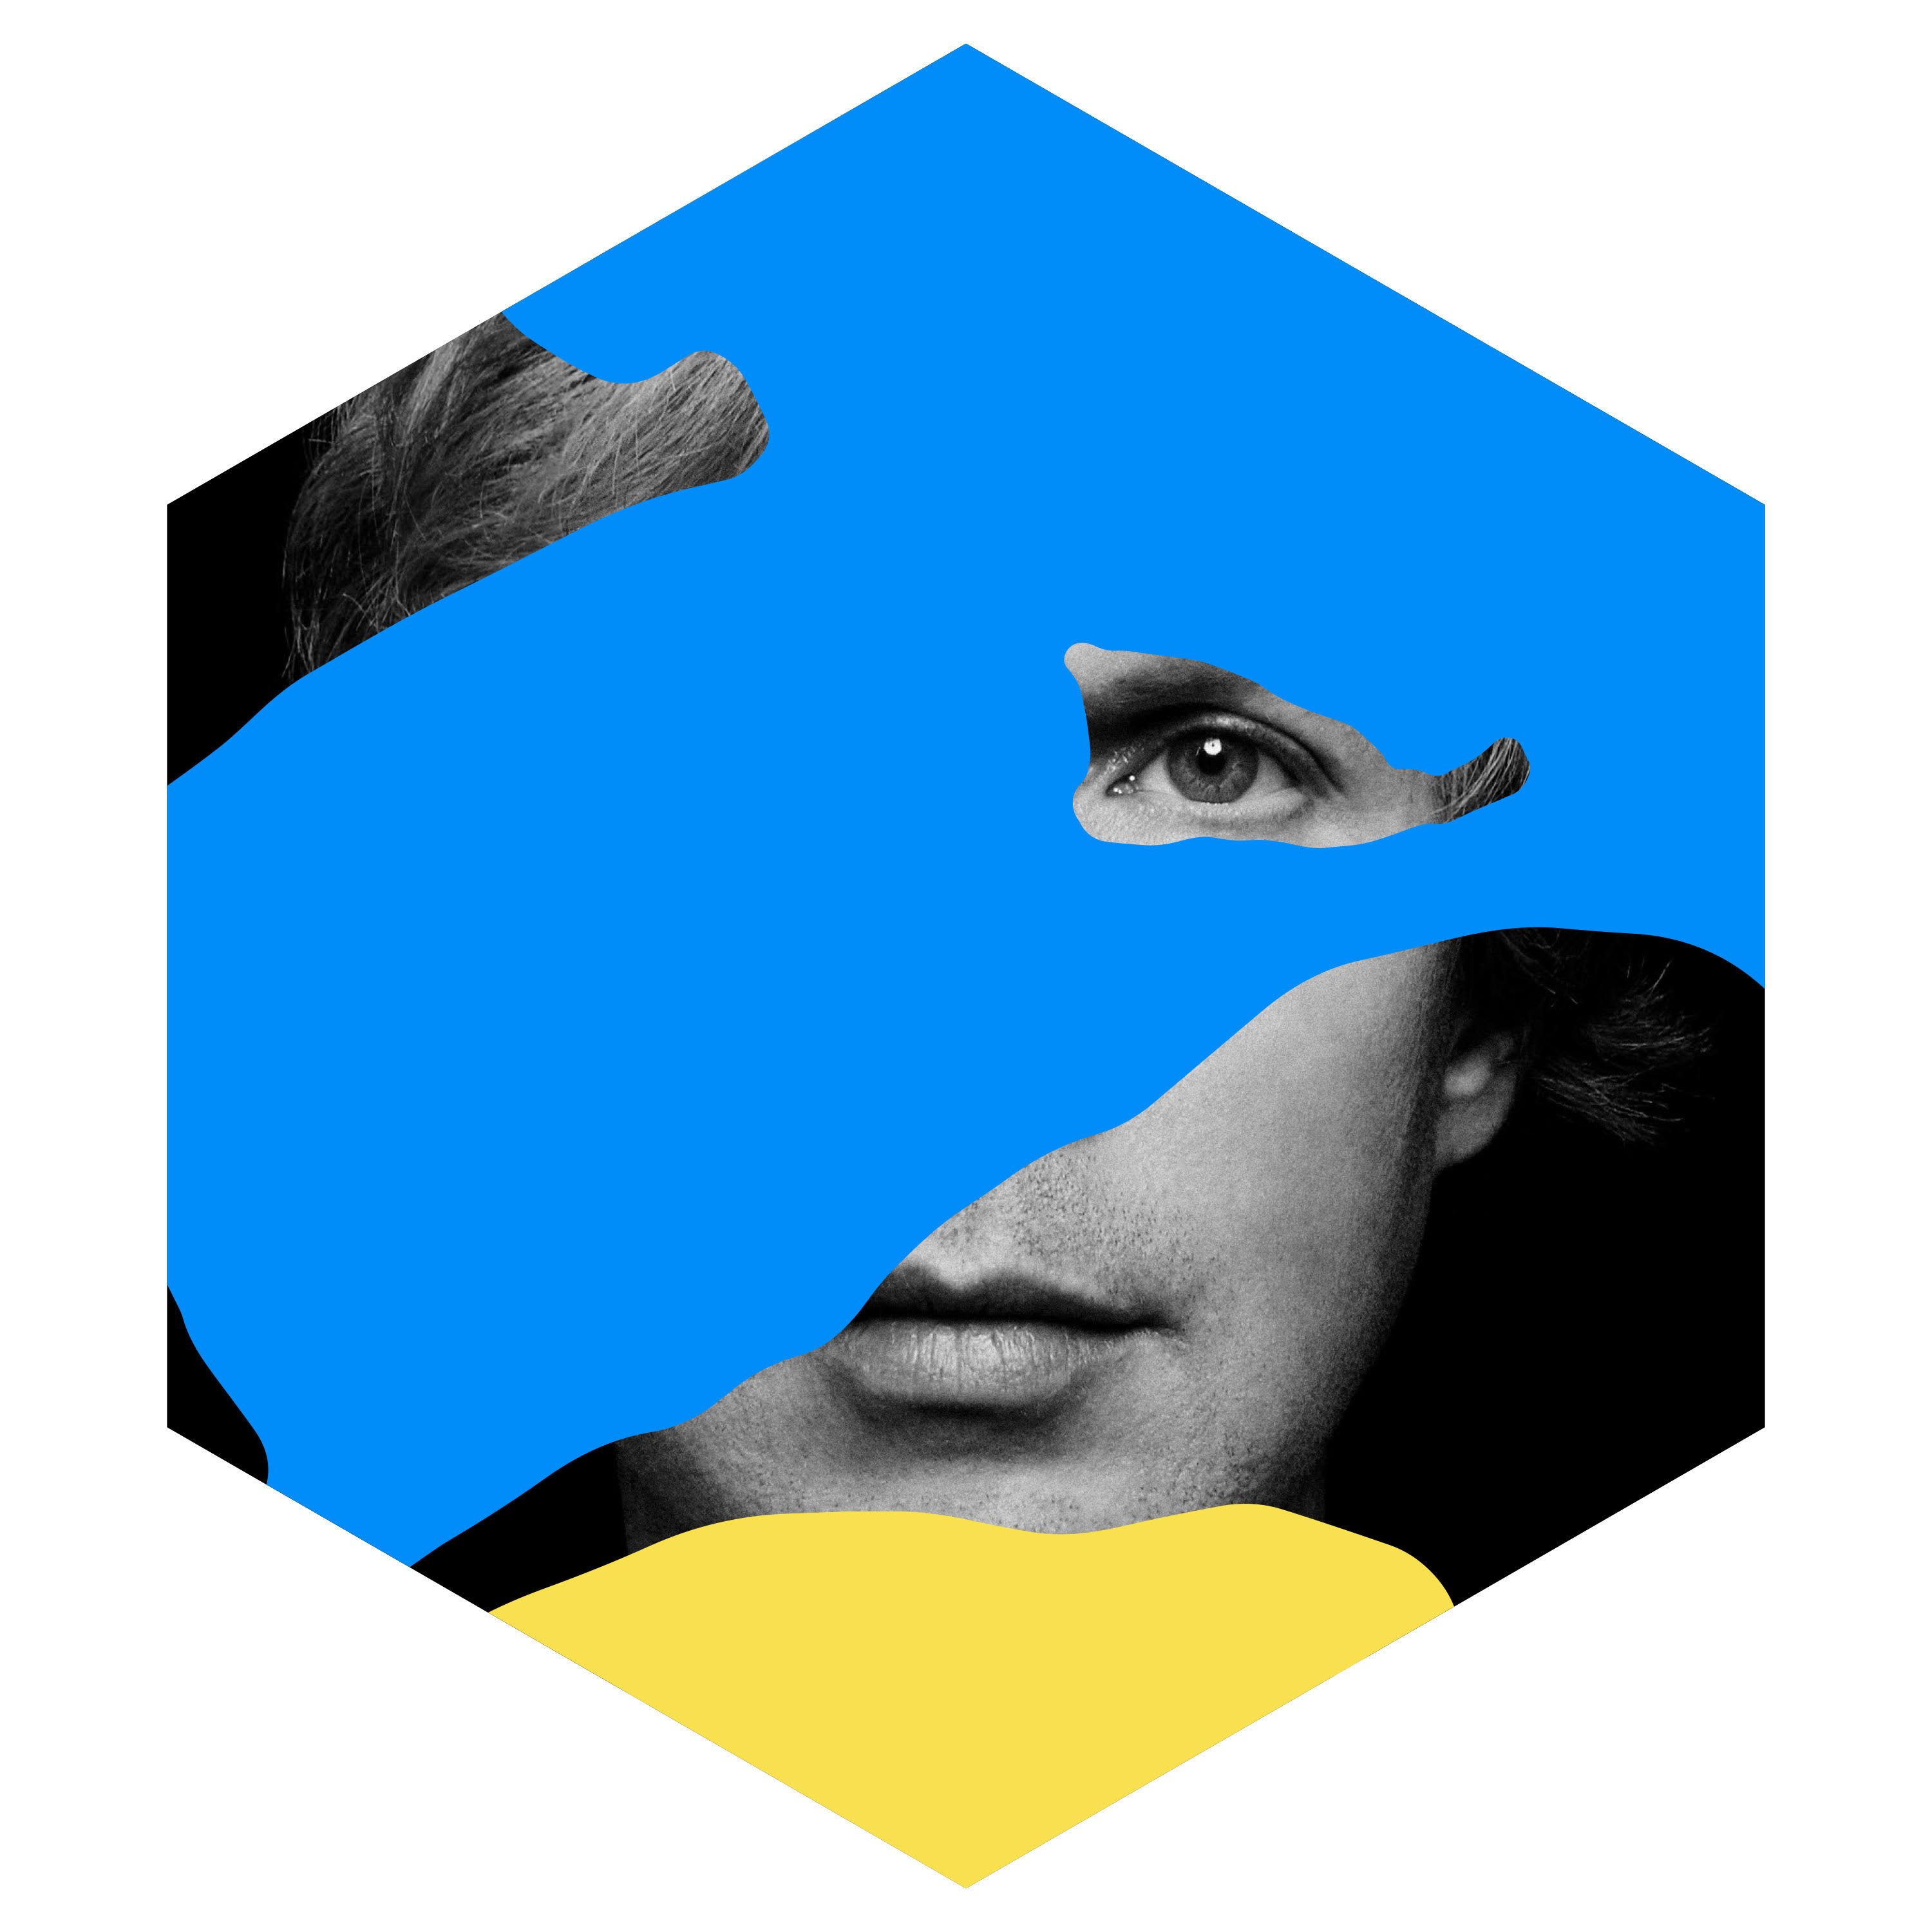 Beck Announces Chicago Pop-Up Shop To Promote “Colors”